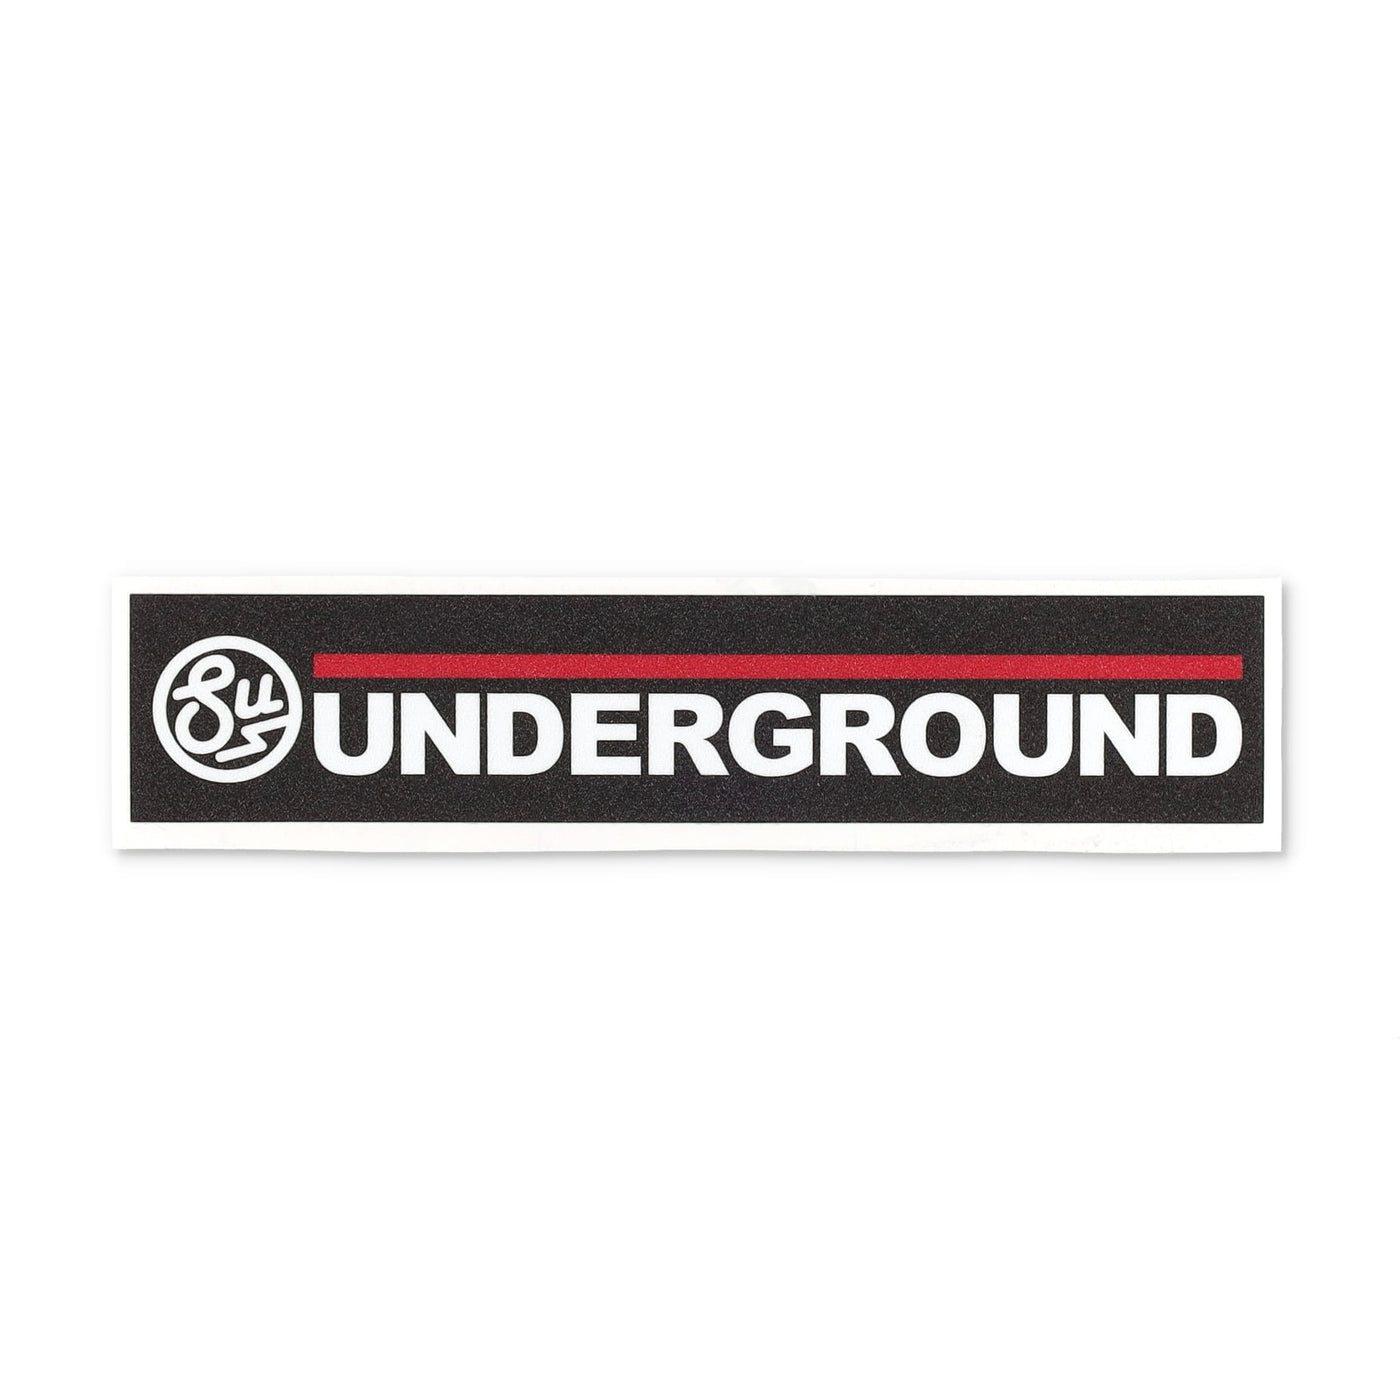 Swimbait Underground Wordmark Logo Boat Carpet Decal